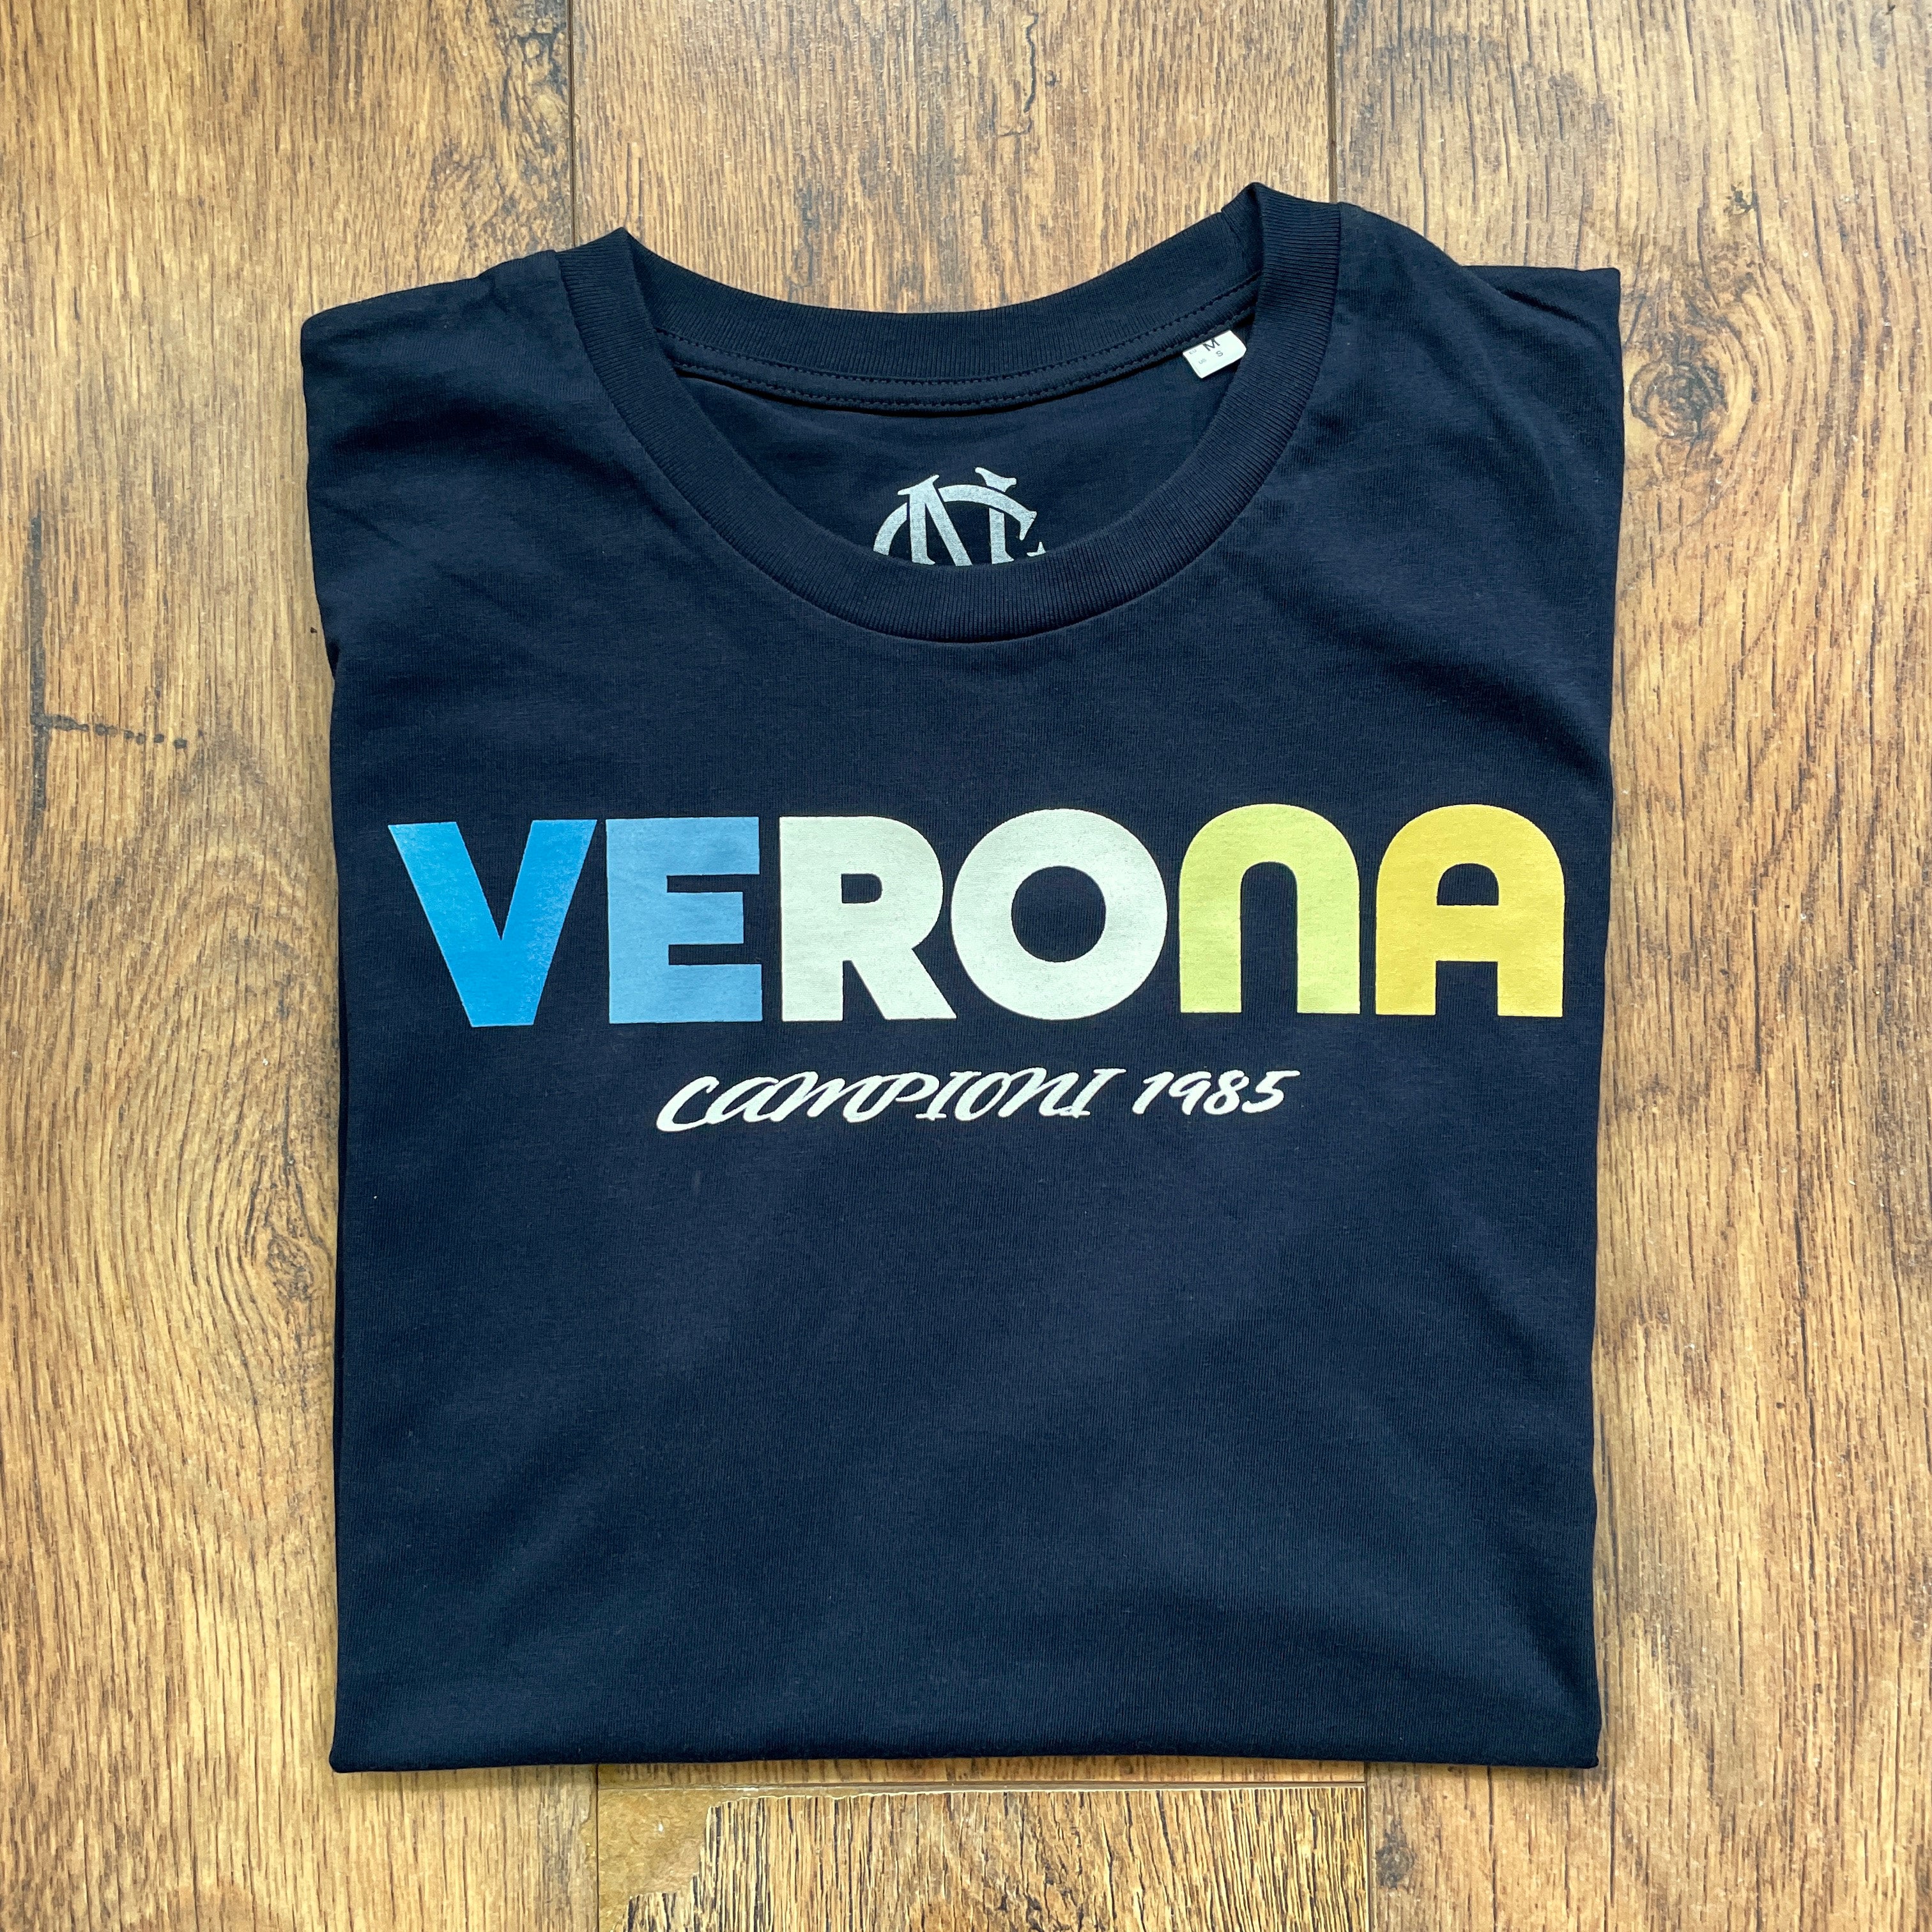 Verona 1985 shirt t-shirt